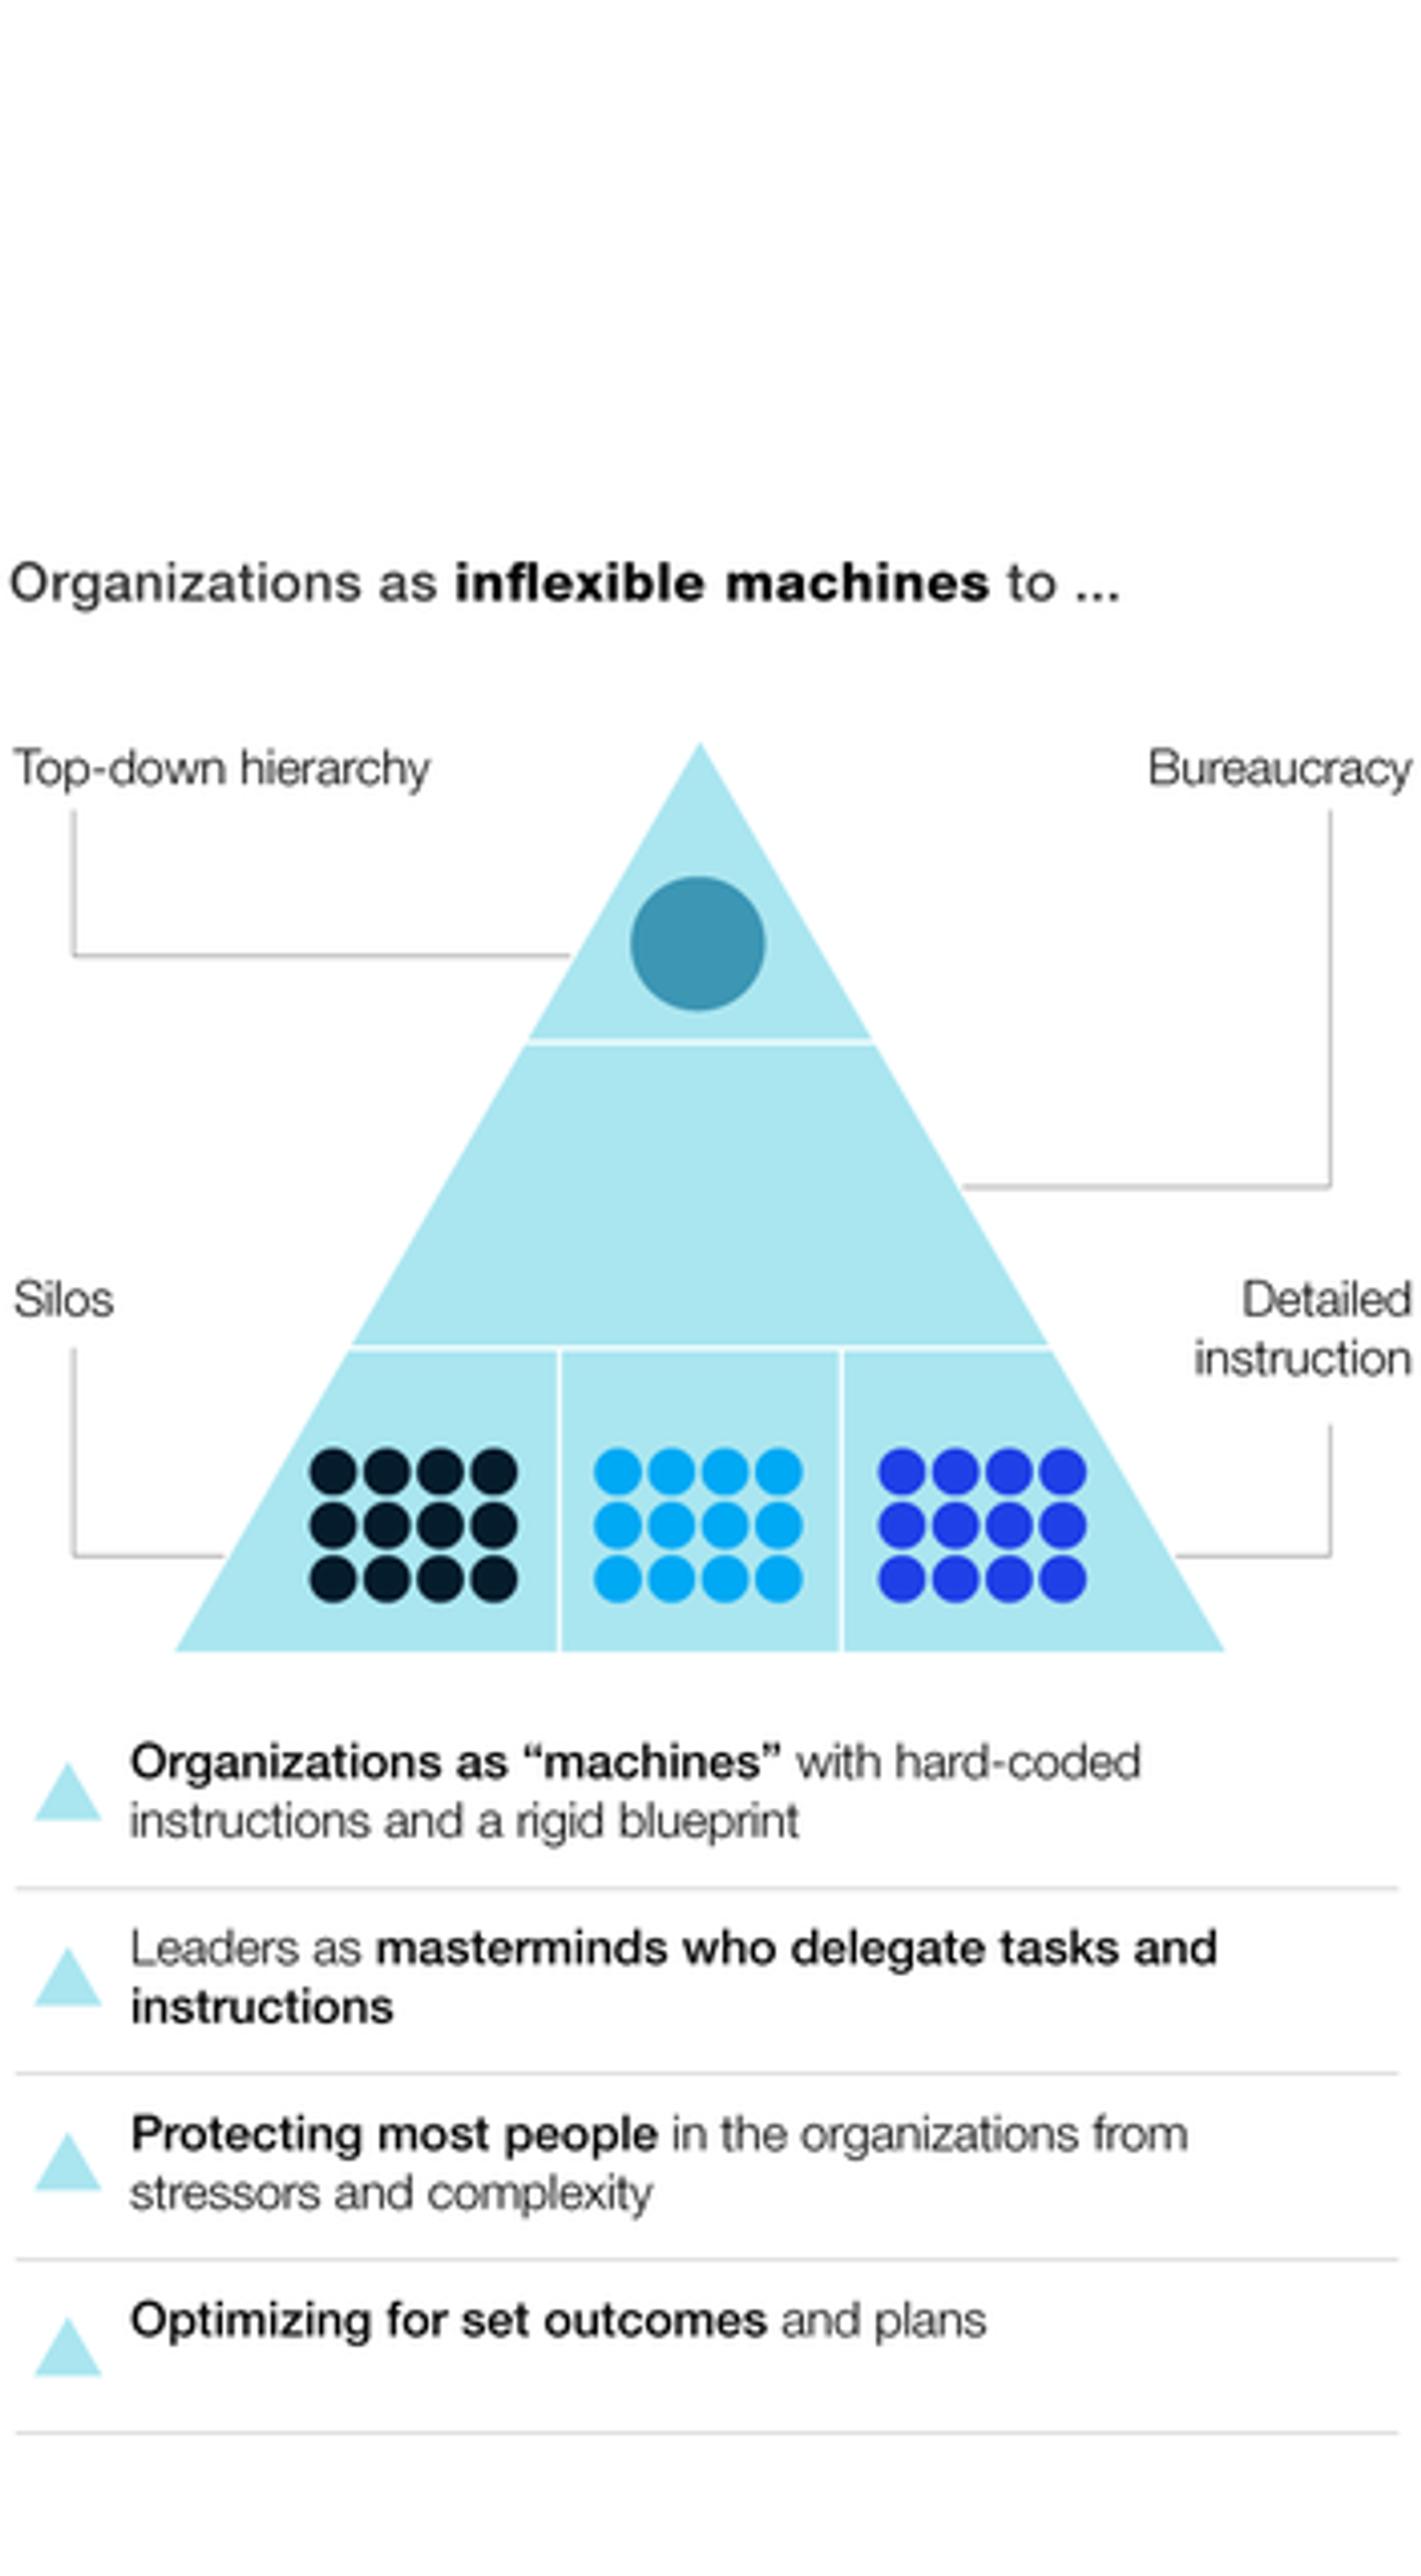 Organizational transformation for an agile telecom | McKinsey